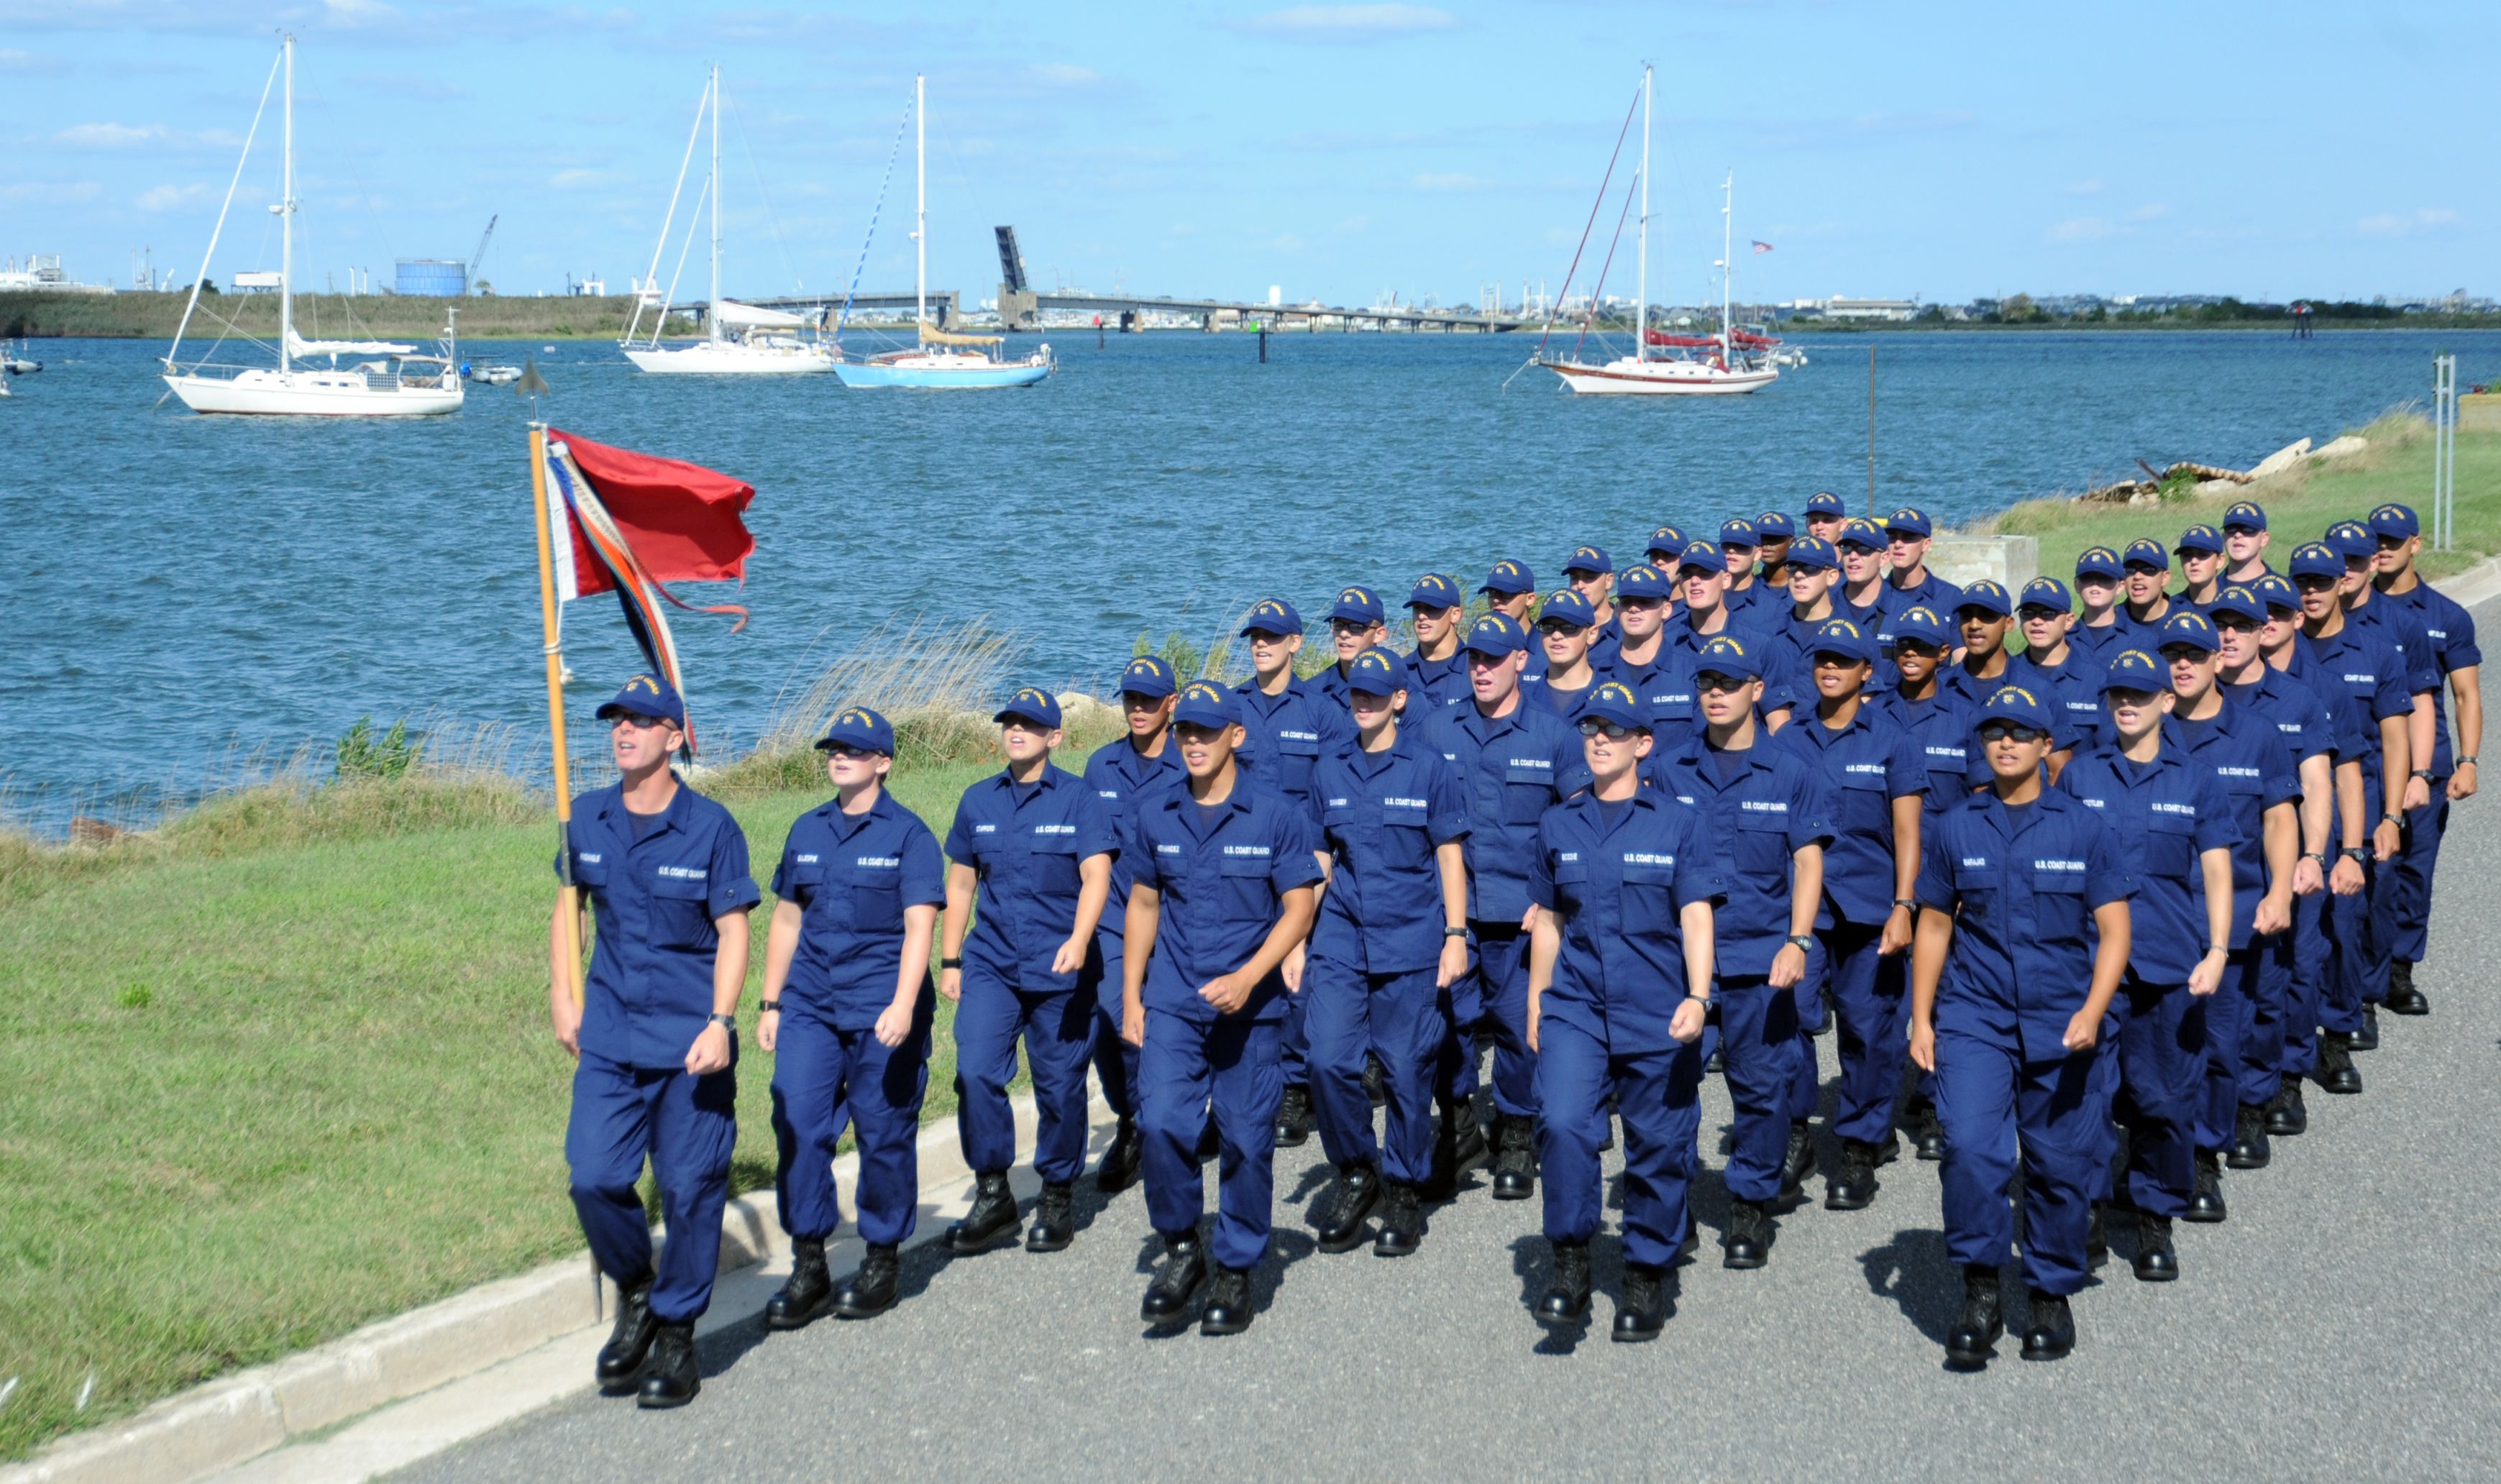 Kicking off the 2013 Coast Guard cadence contest « Coast Guard All